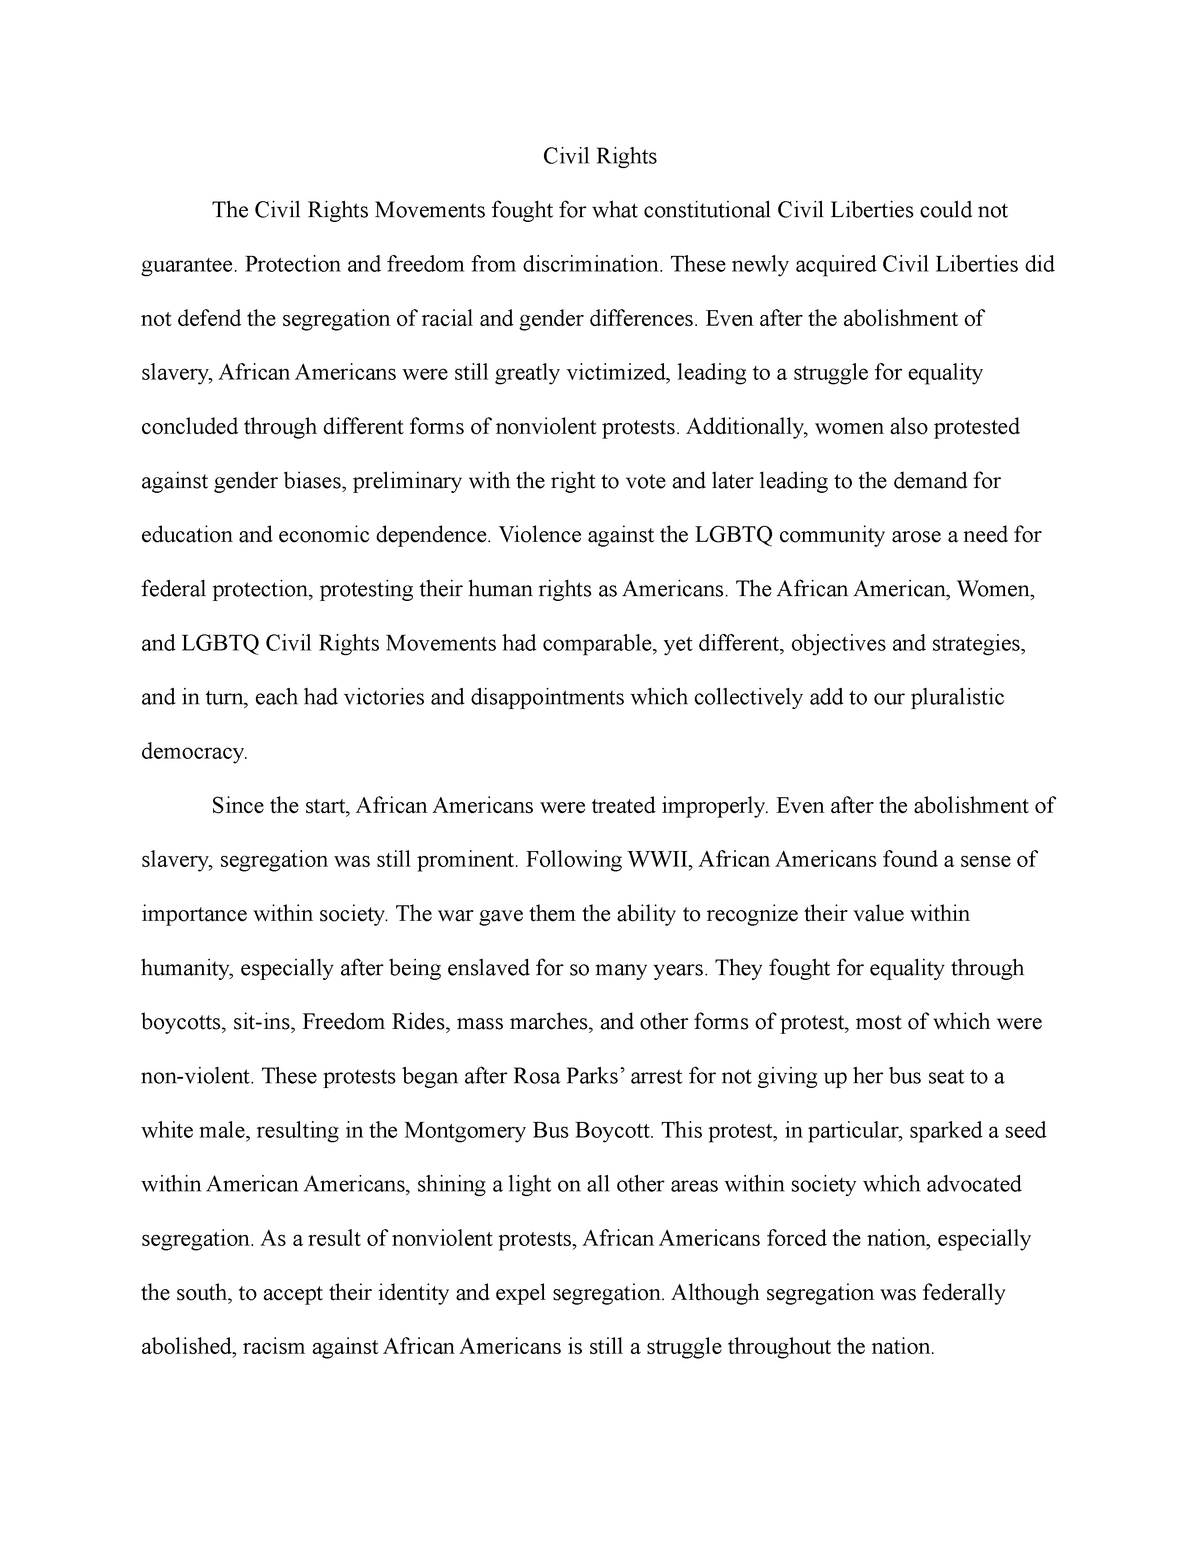 Реферат: Civil Rights Essay Research Paper Civil rights